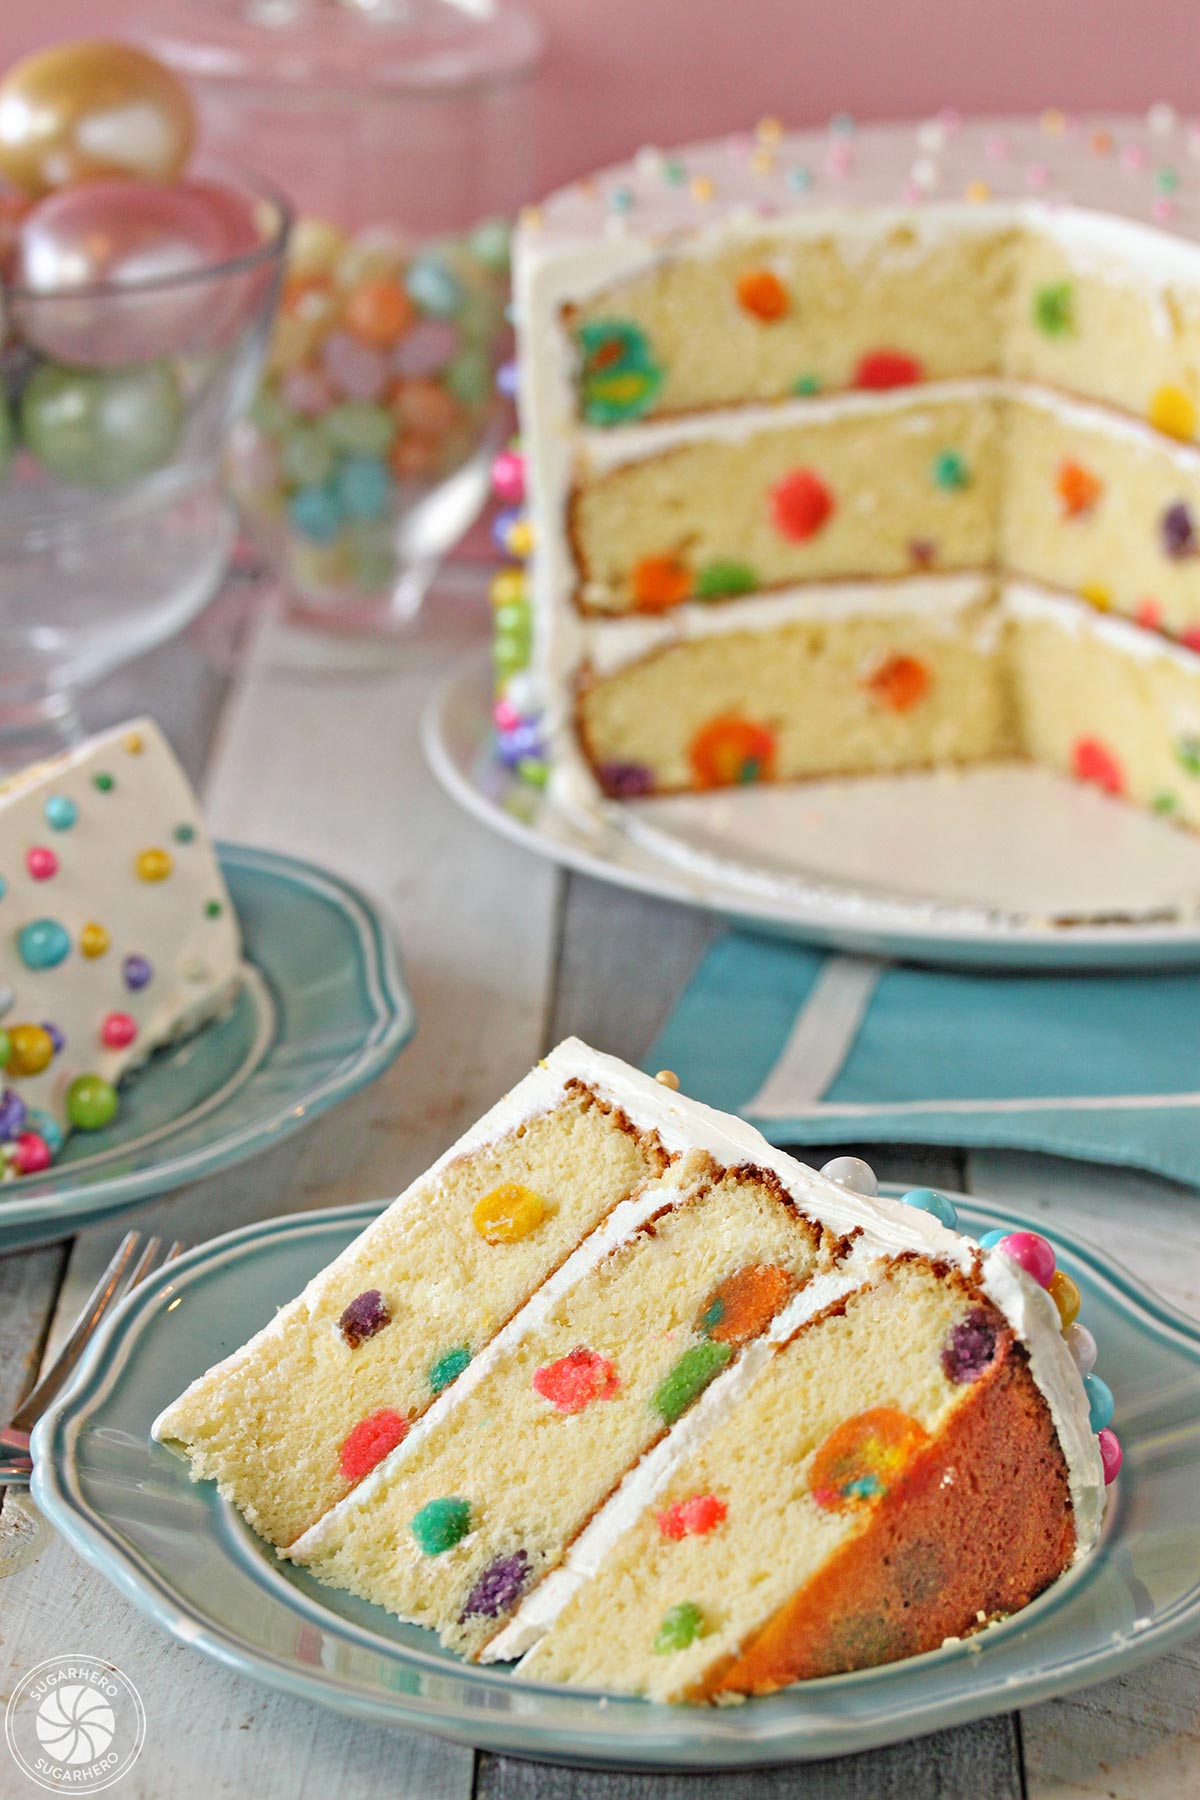 Easter Polka Dot Cake - A slice of the polka dot cake, displaying full cake in background.  | From SugarHero.com